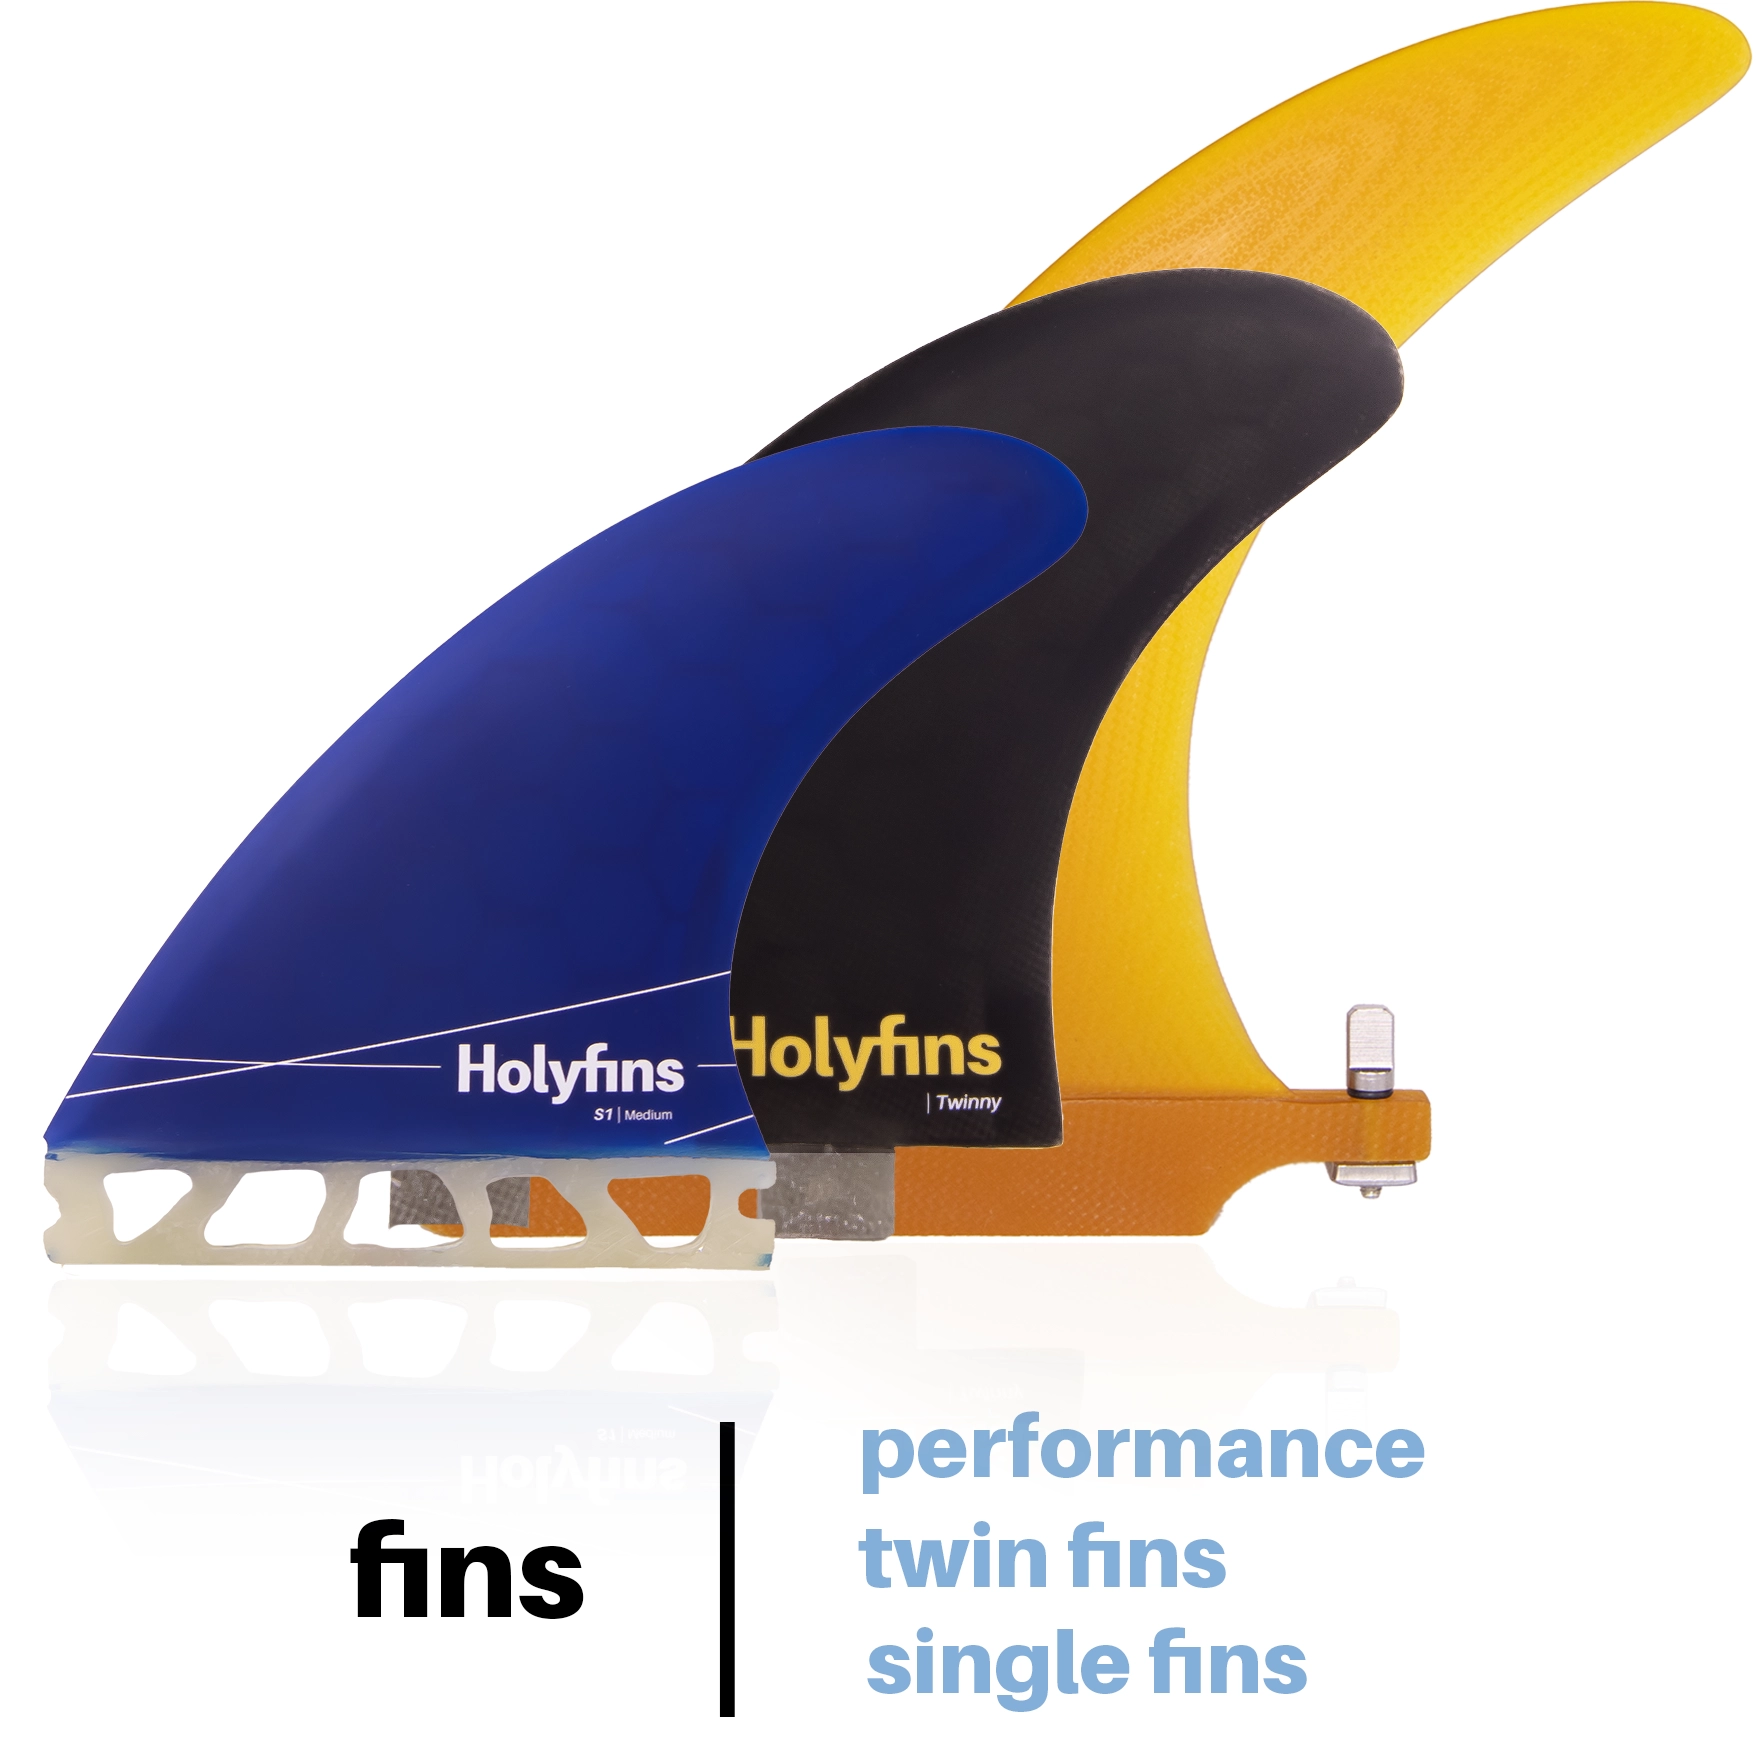 Rx1 holyfins performance thruster at 52 €